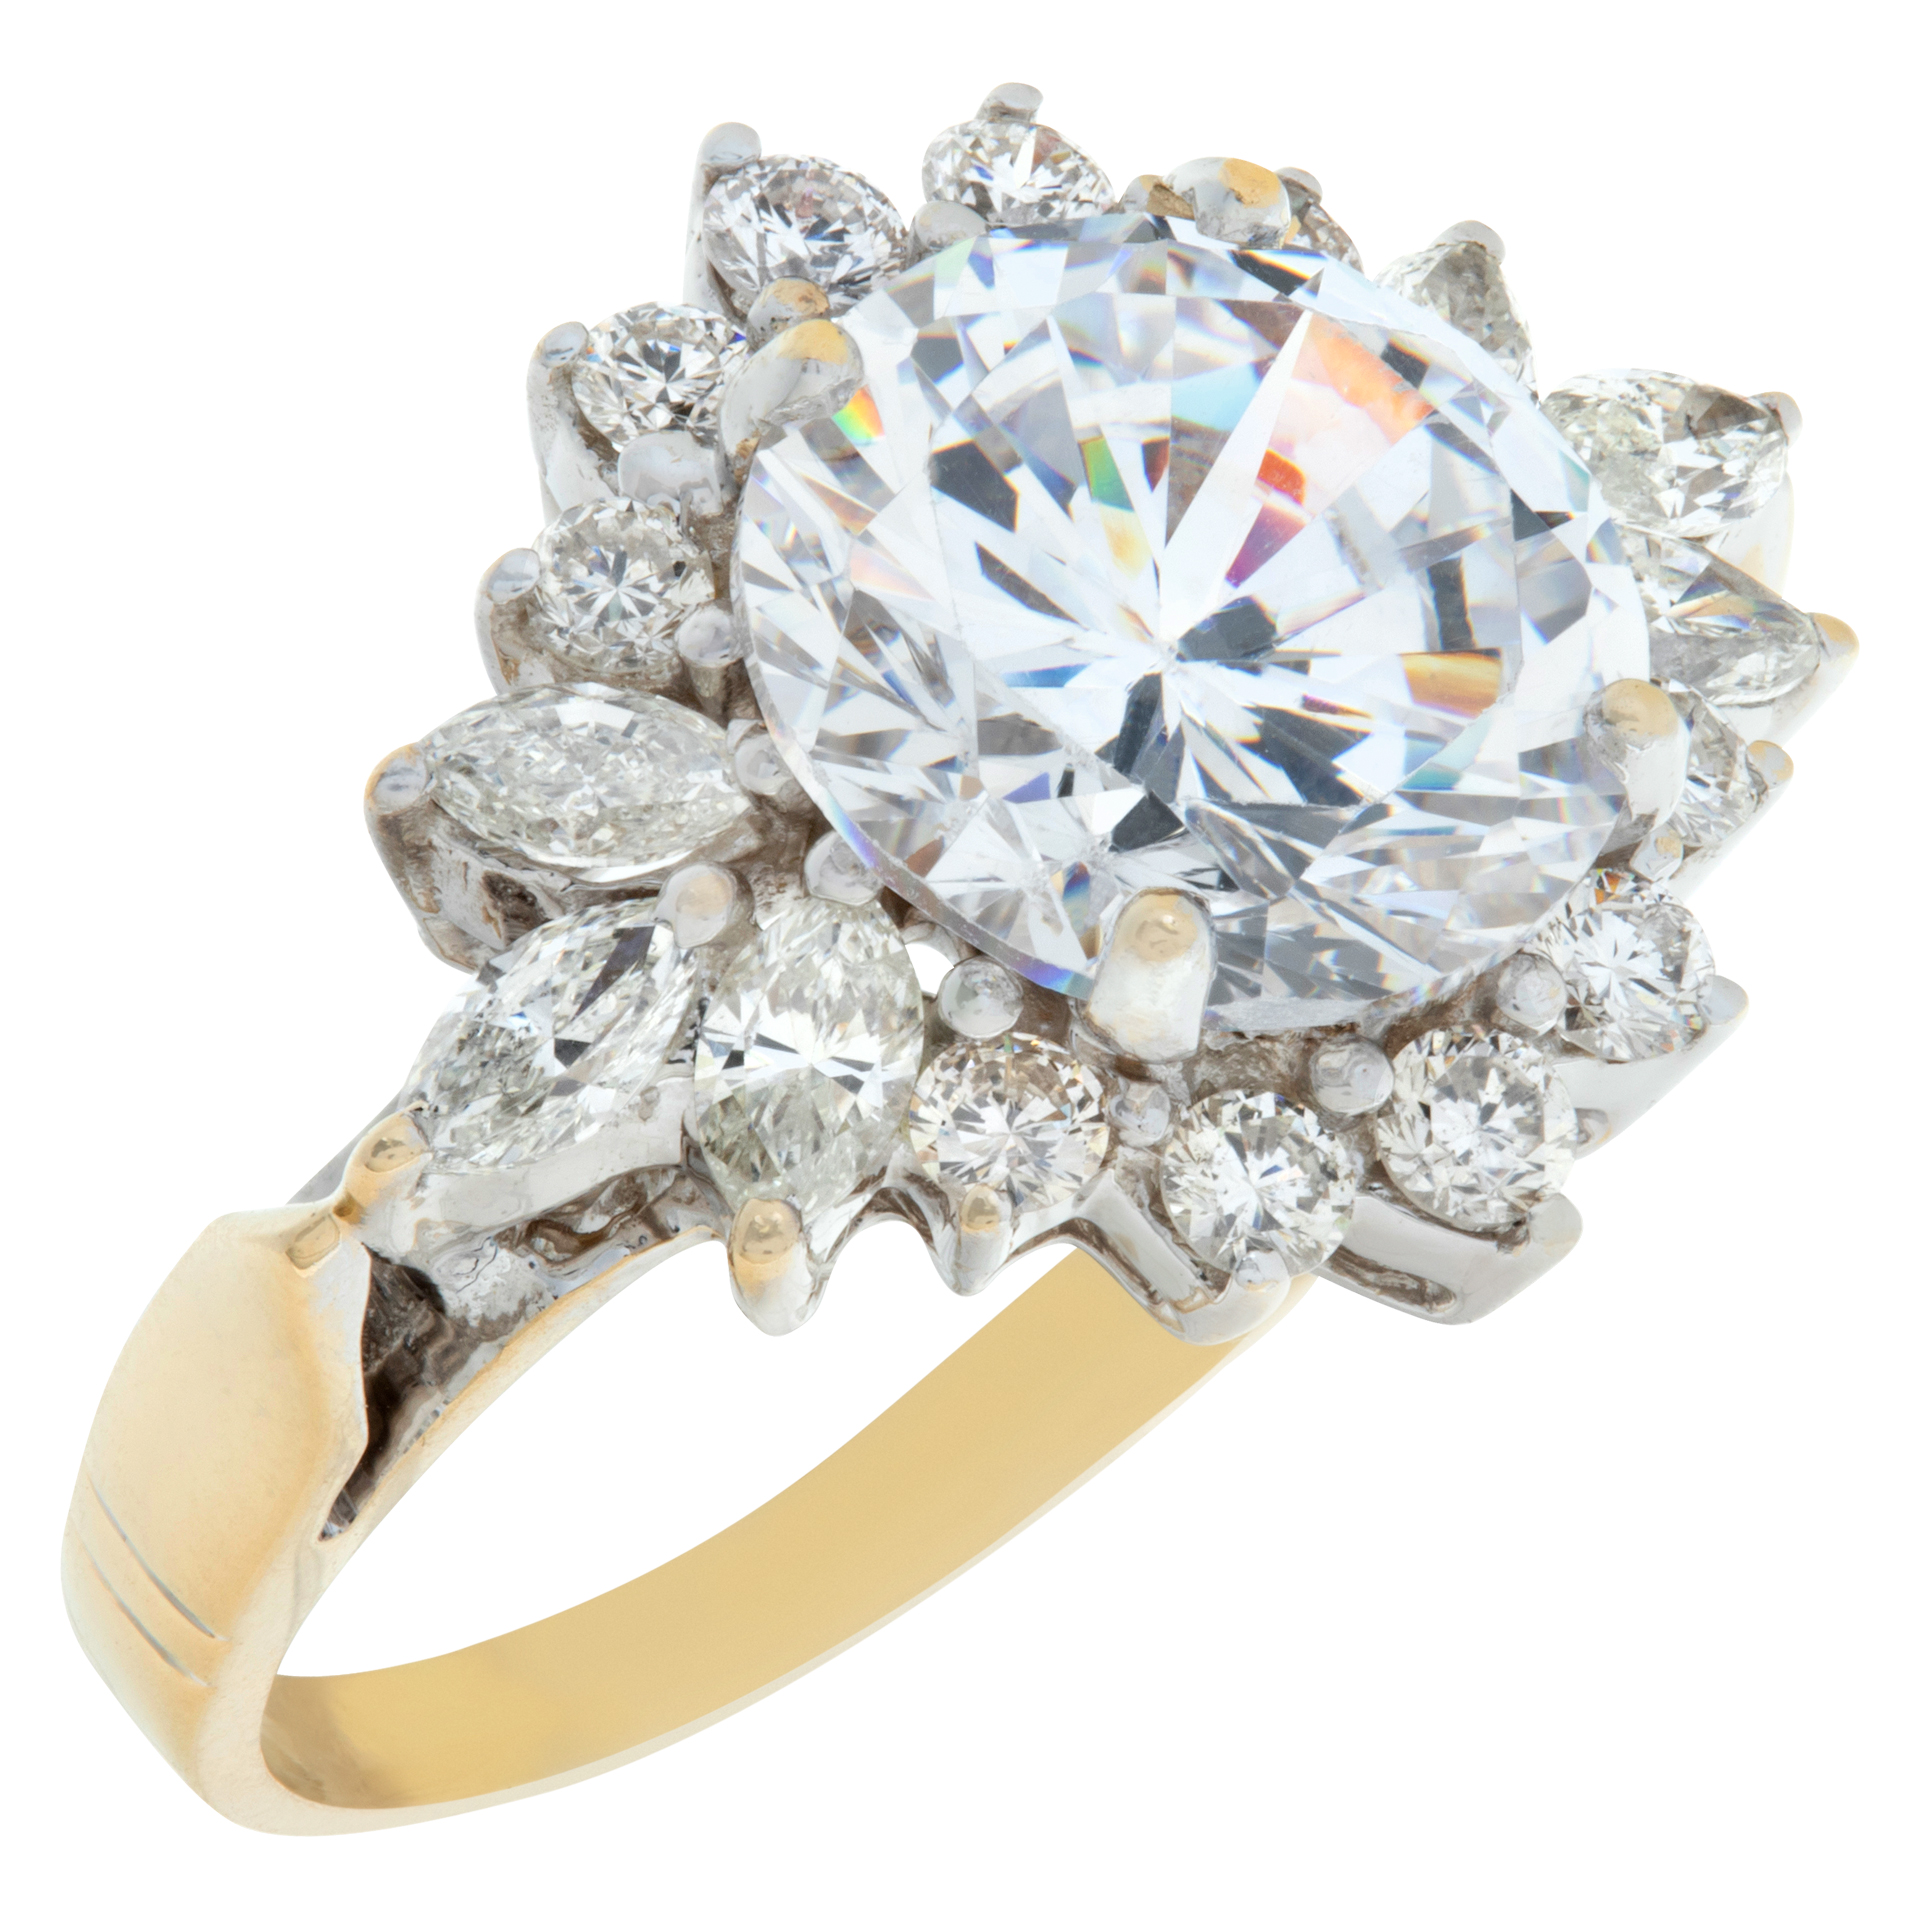 GIA certified 3.04 carat round brilliant cut diamond- D color- SI2 clarity. image 3